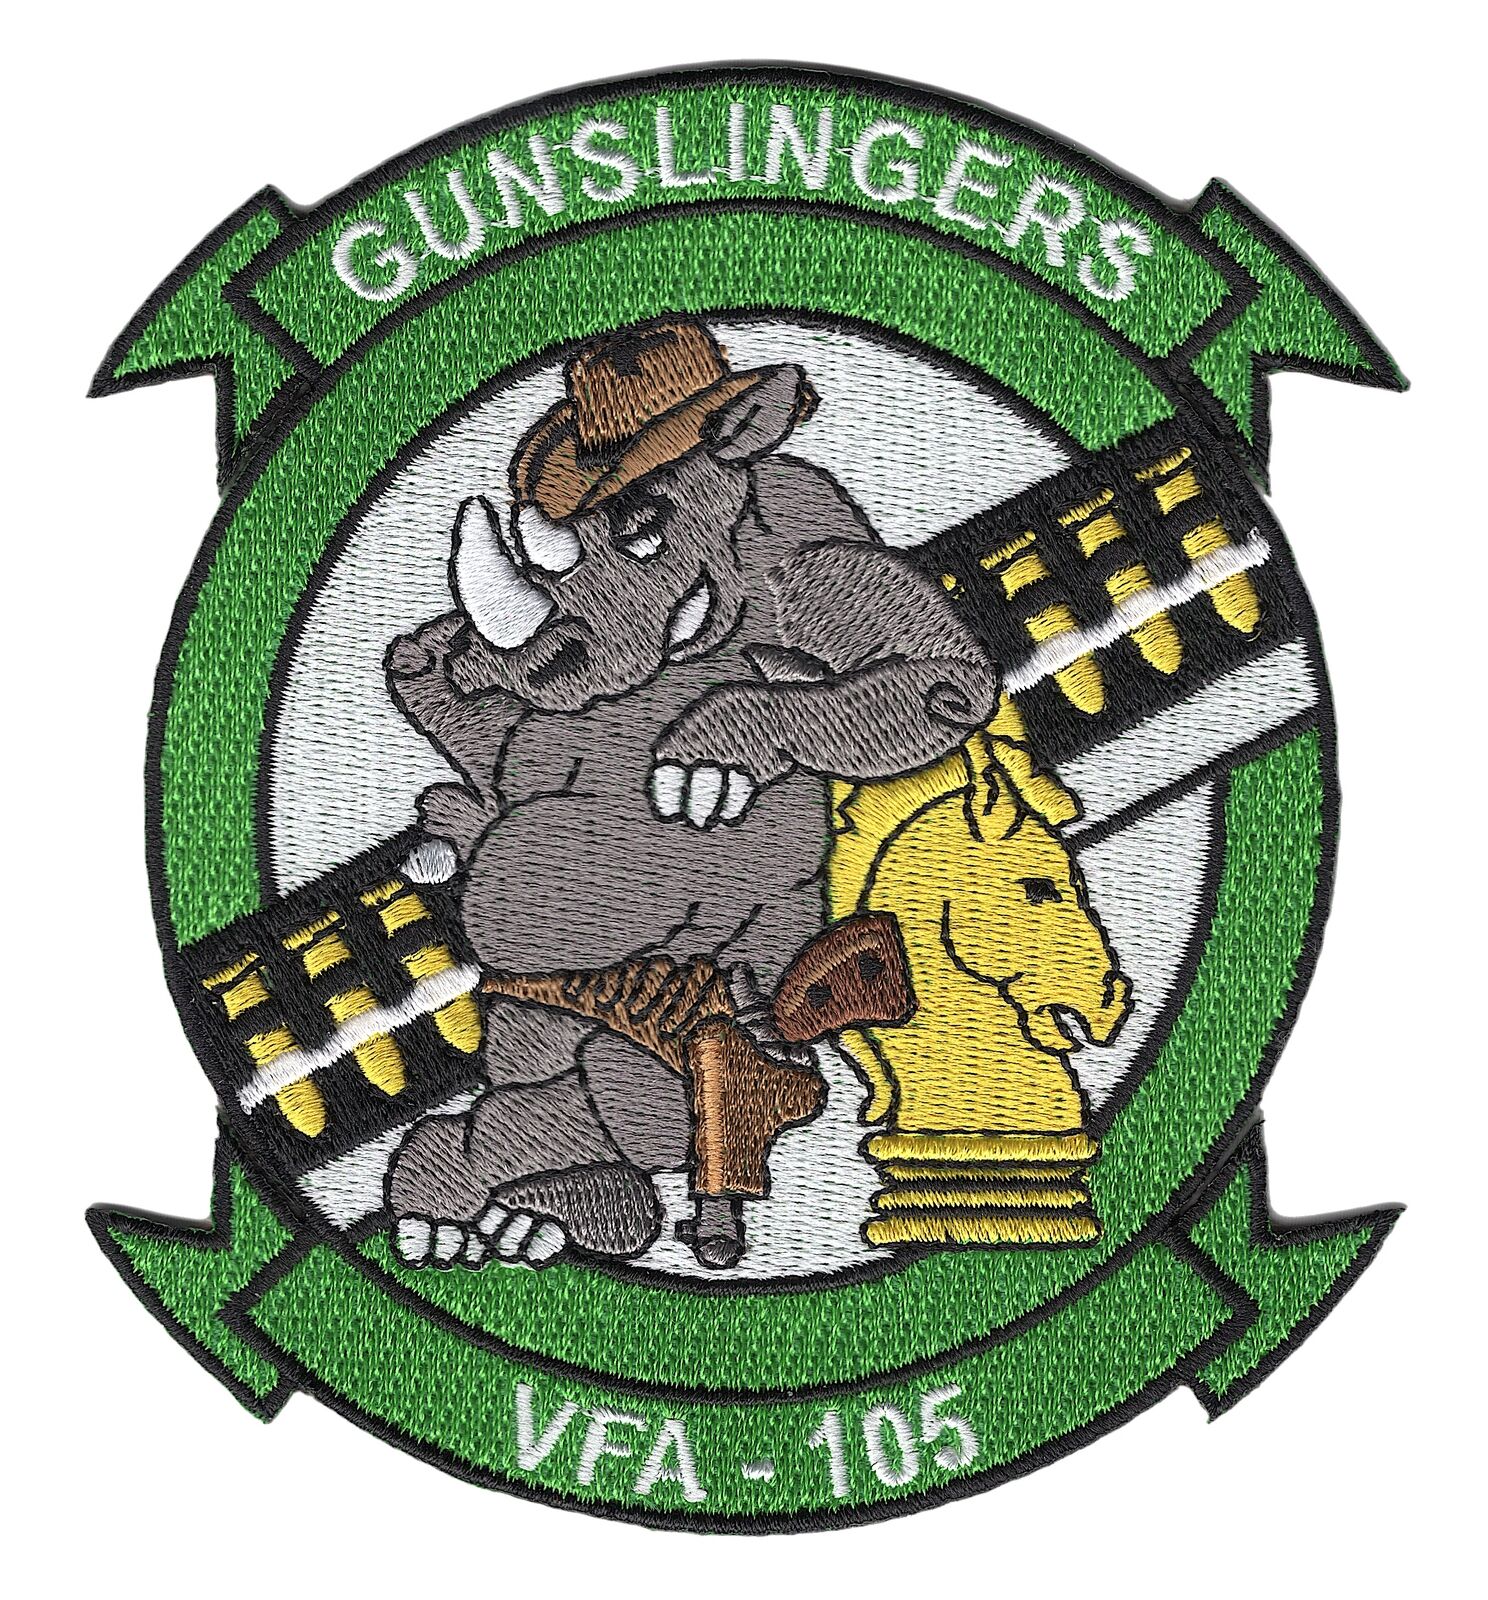 VFA-105 Gunslingers patch - Rhino Strike Fighter Squadron